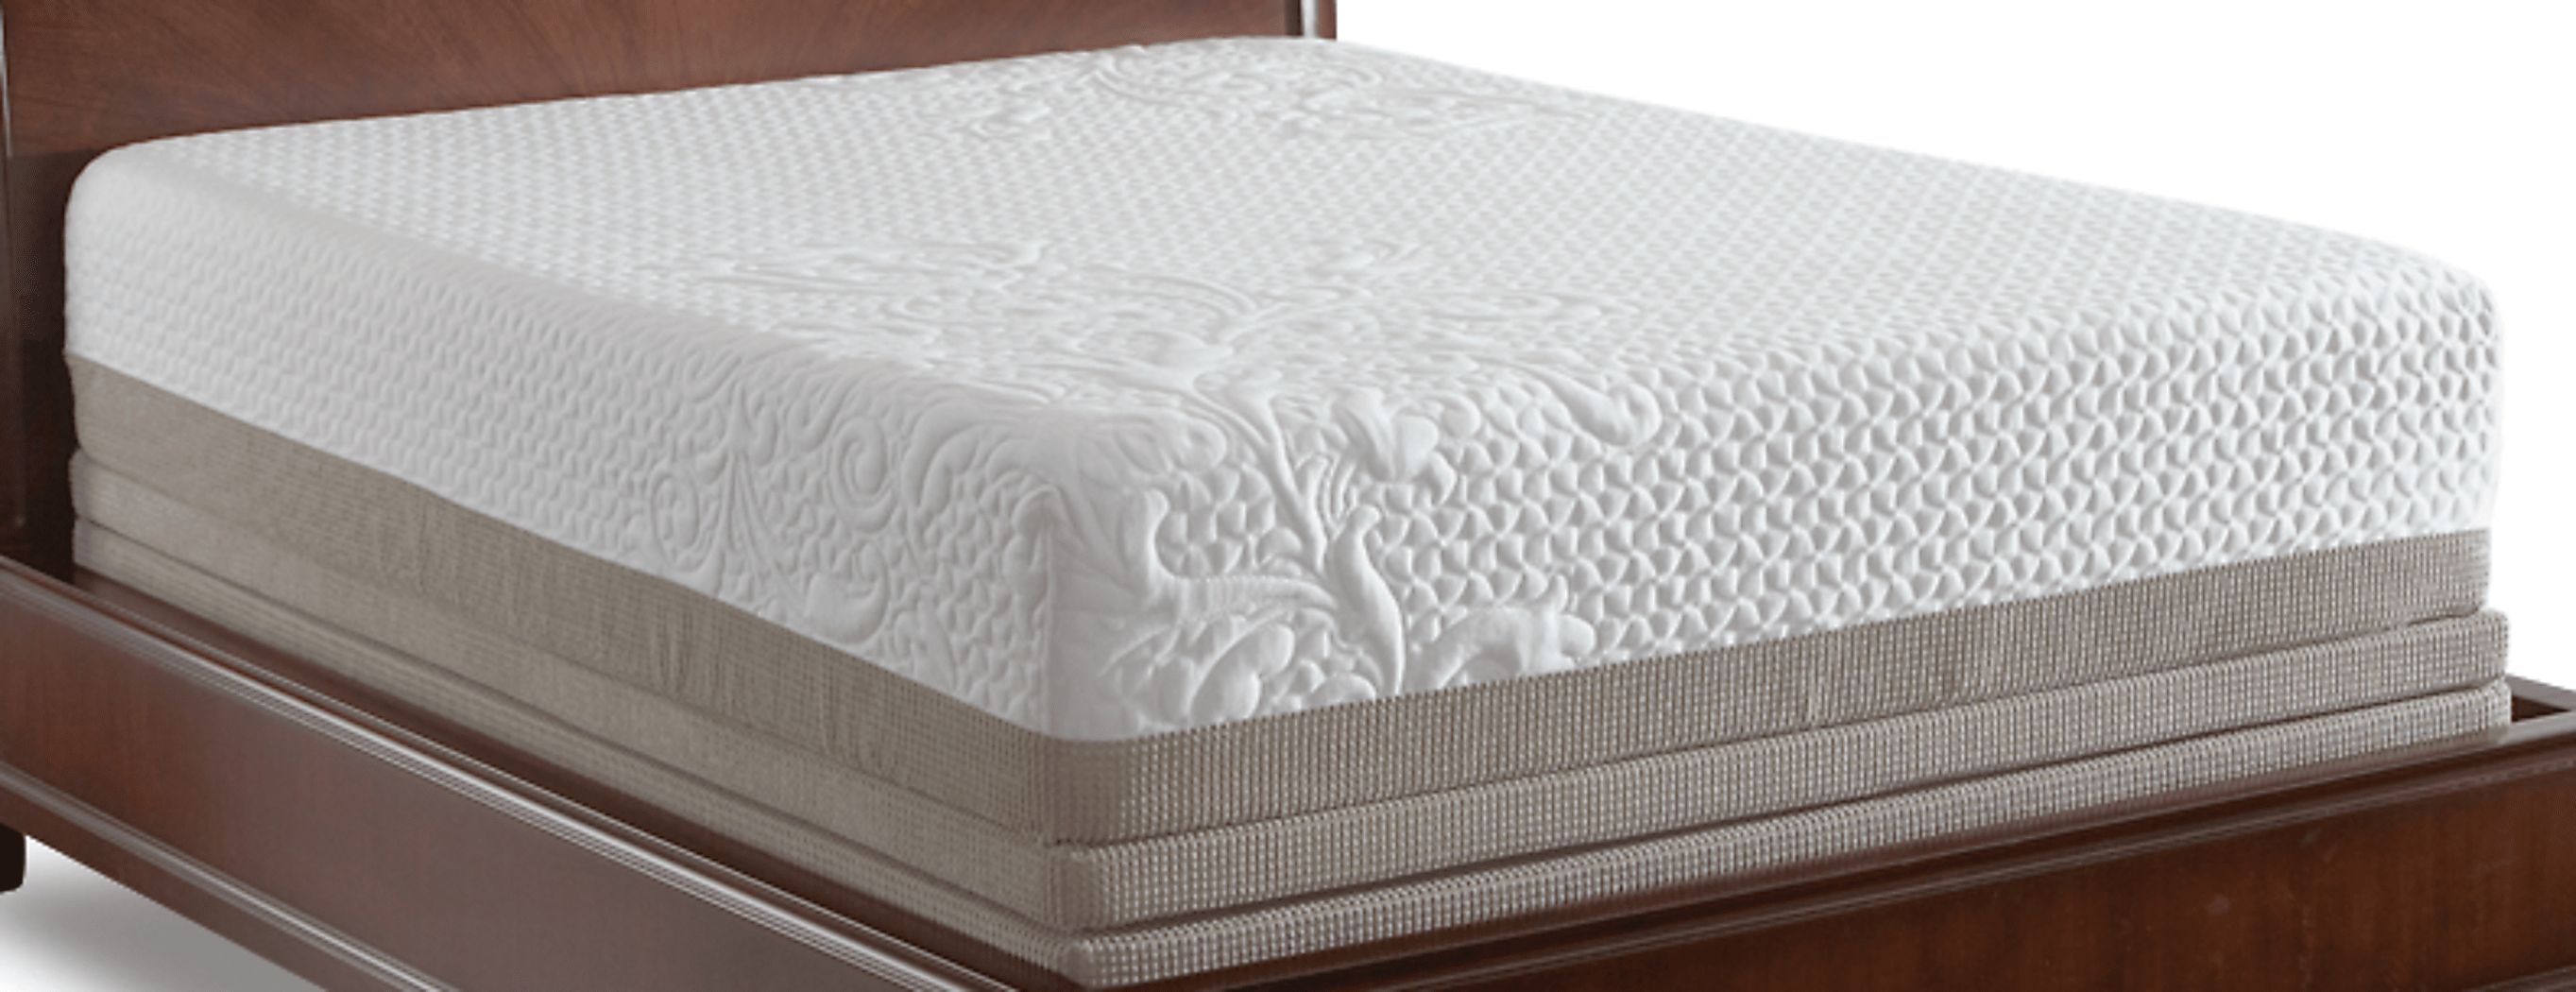 serta icomfort renewal refined mattress